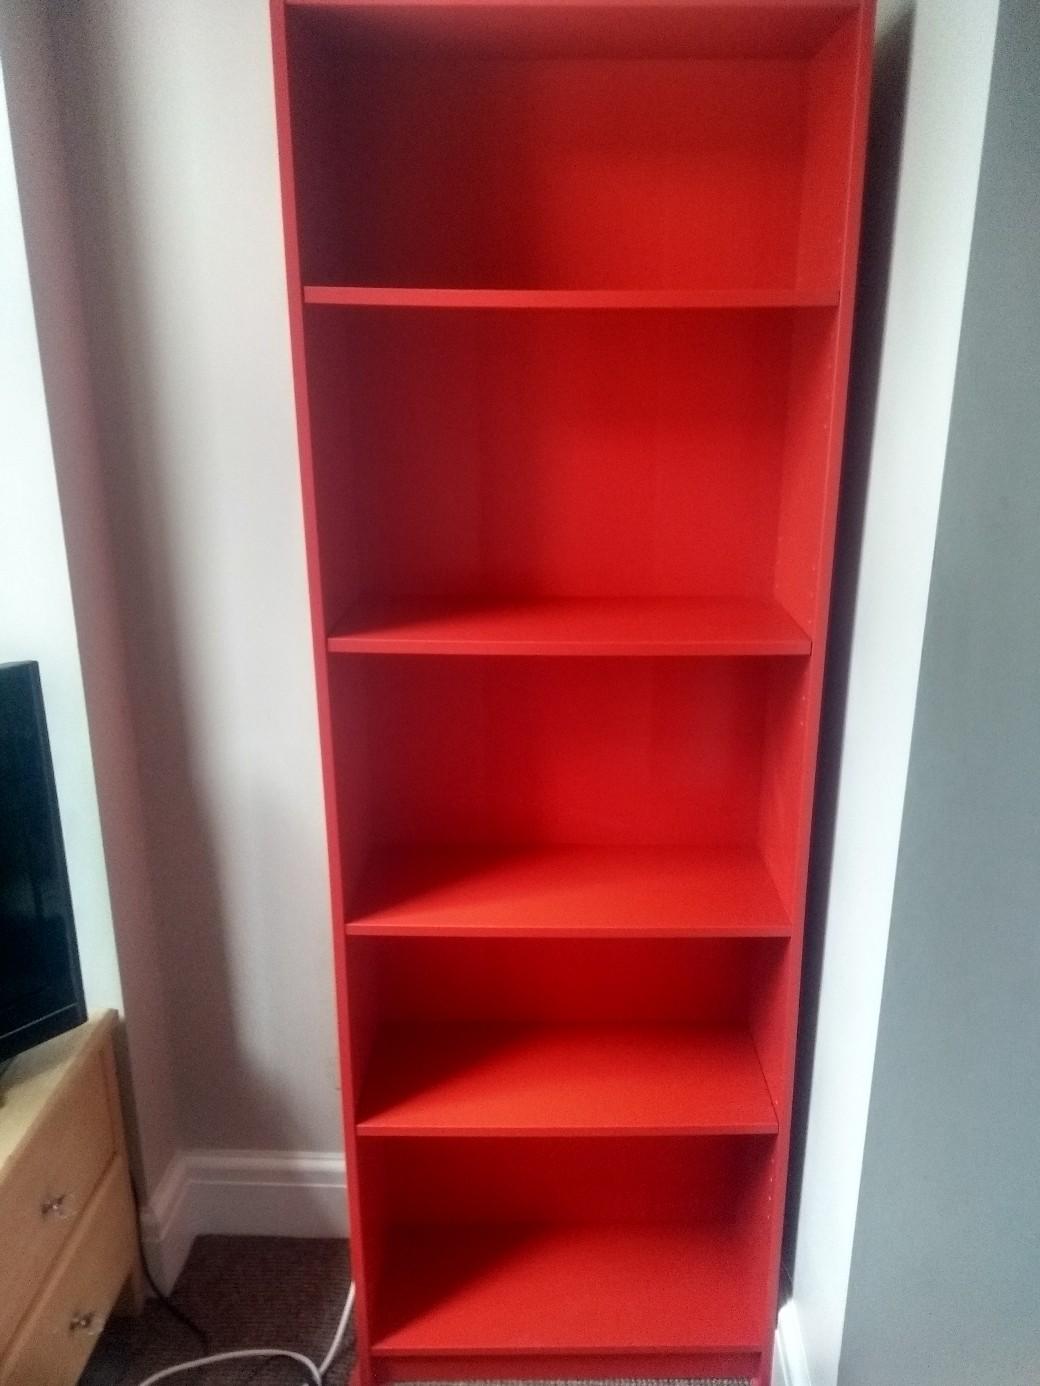 Red Billy Bookcase Adjustable Shelves In Sk16 Tameside For 18 00